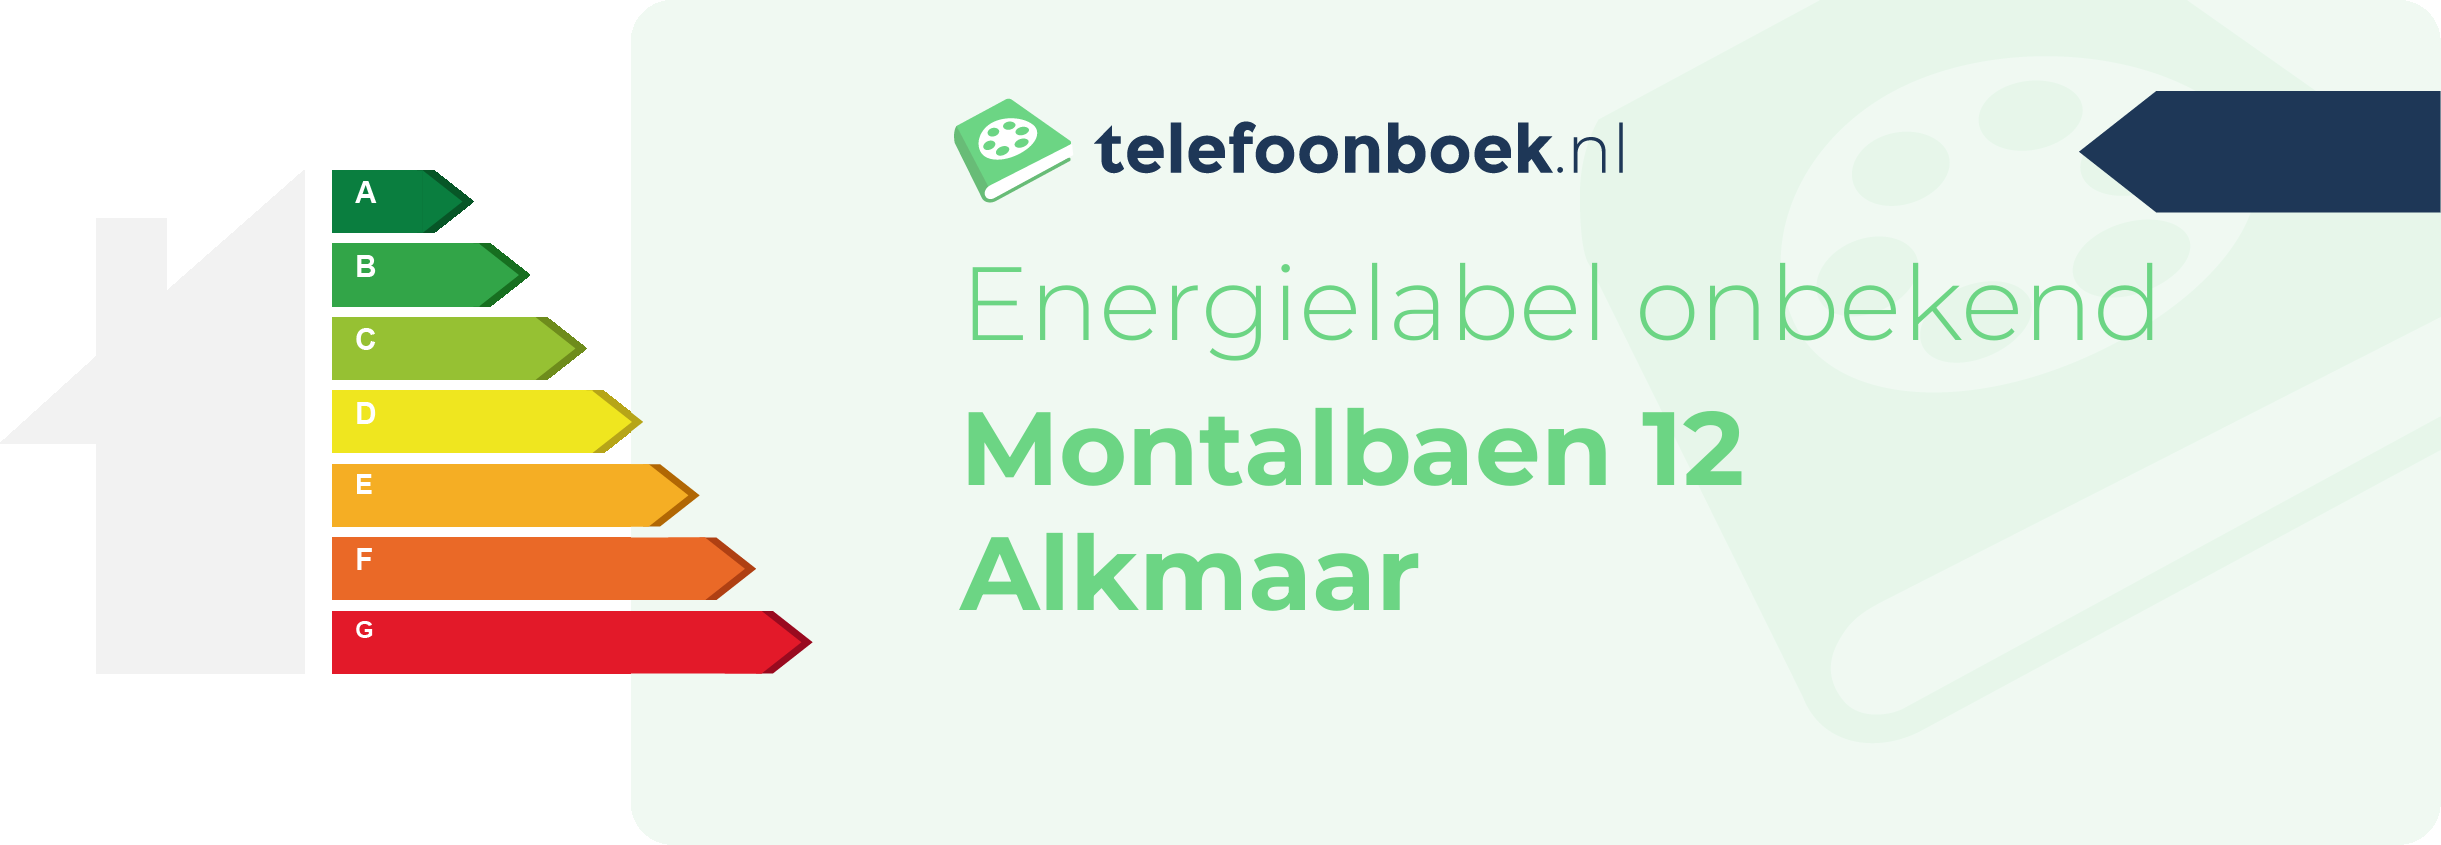 Energielabel Montalbaen 12 Alkmaar